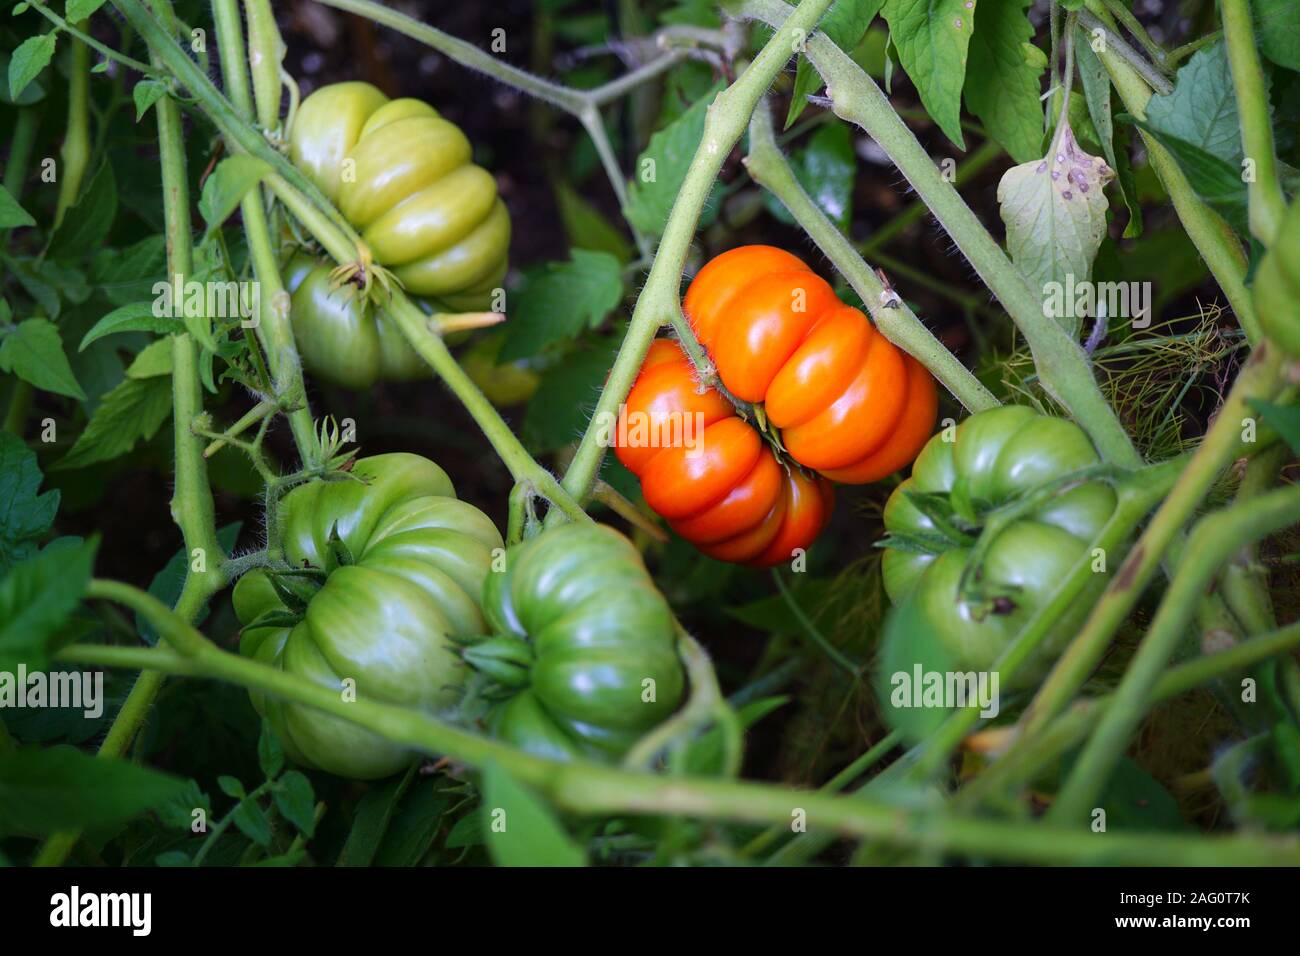 Costoluto Fiorentino (Italian tomato) tomatoes on vine Stock Photo